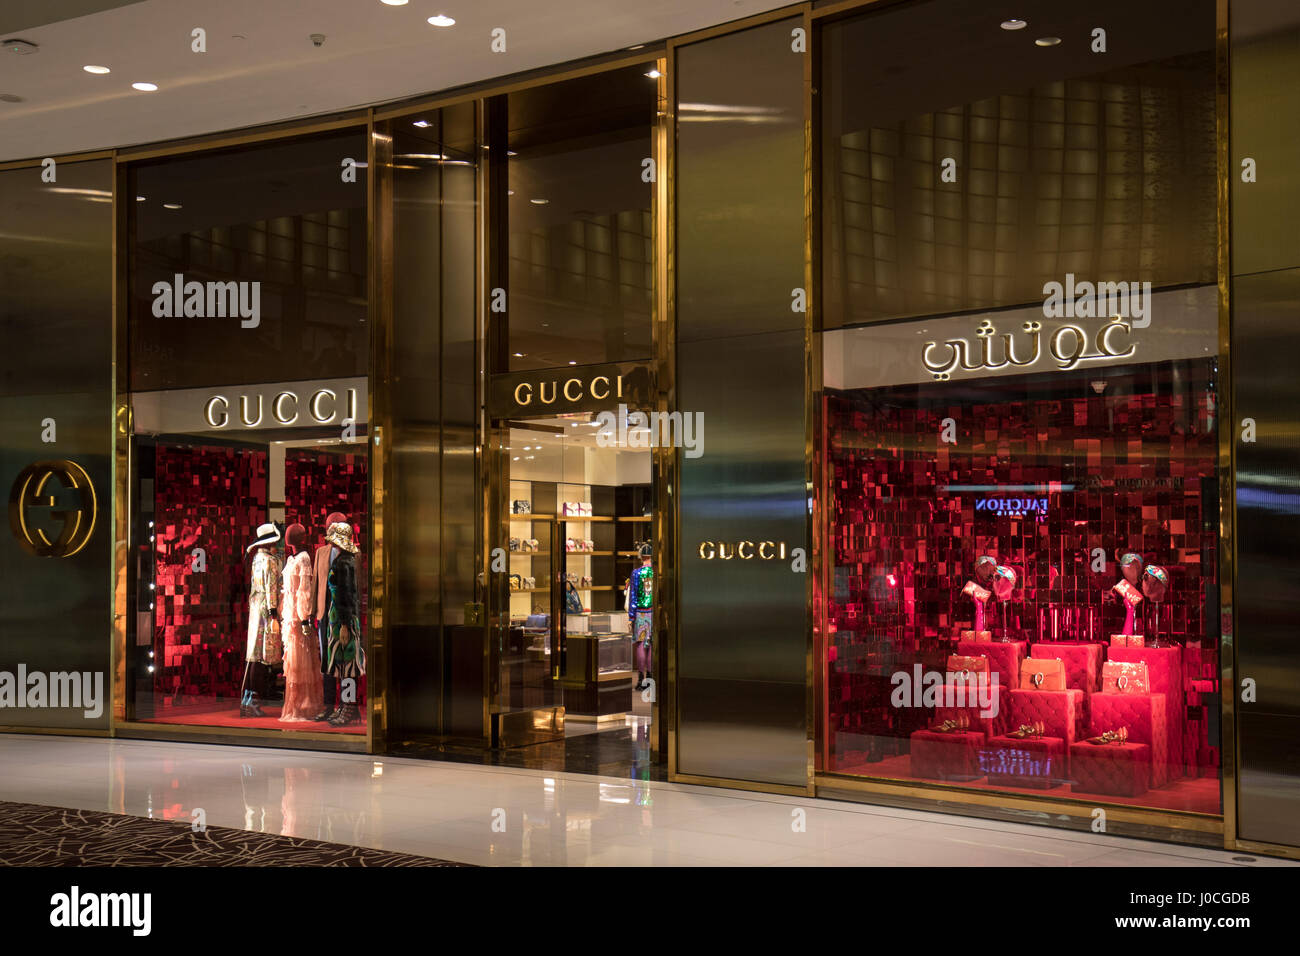 Der Gucci-Shop im Fashion Avenue der Dubai Mall. Stockfoto